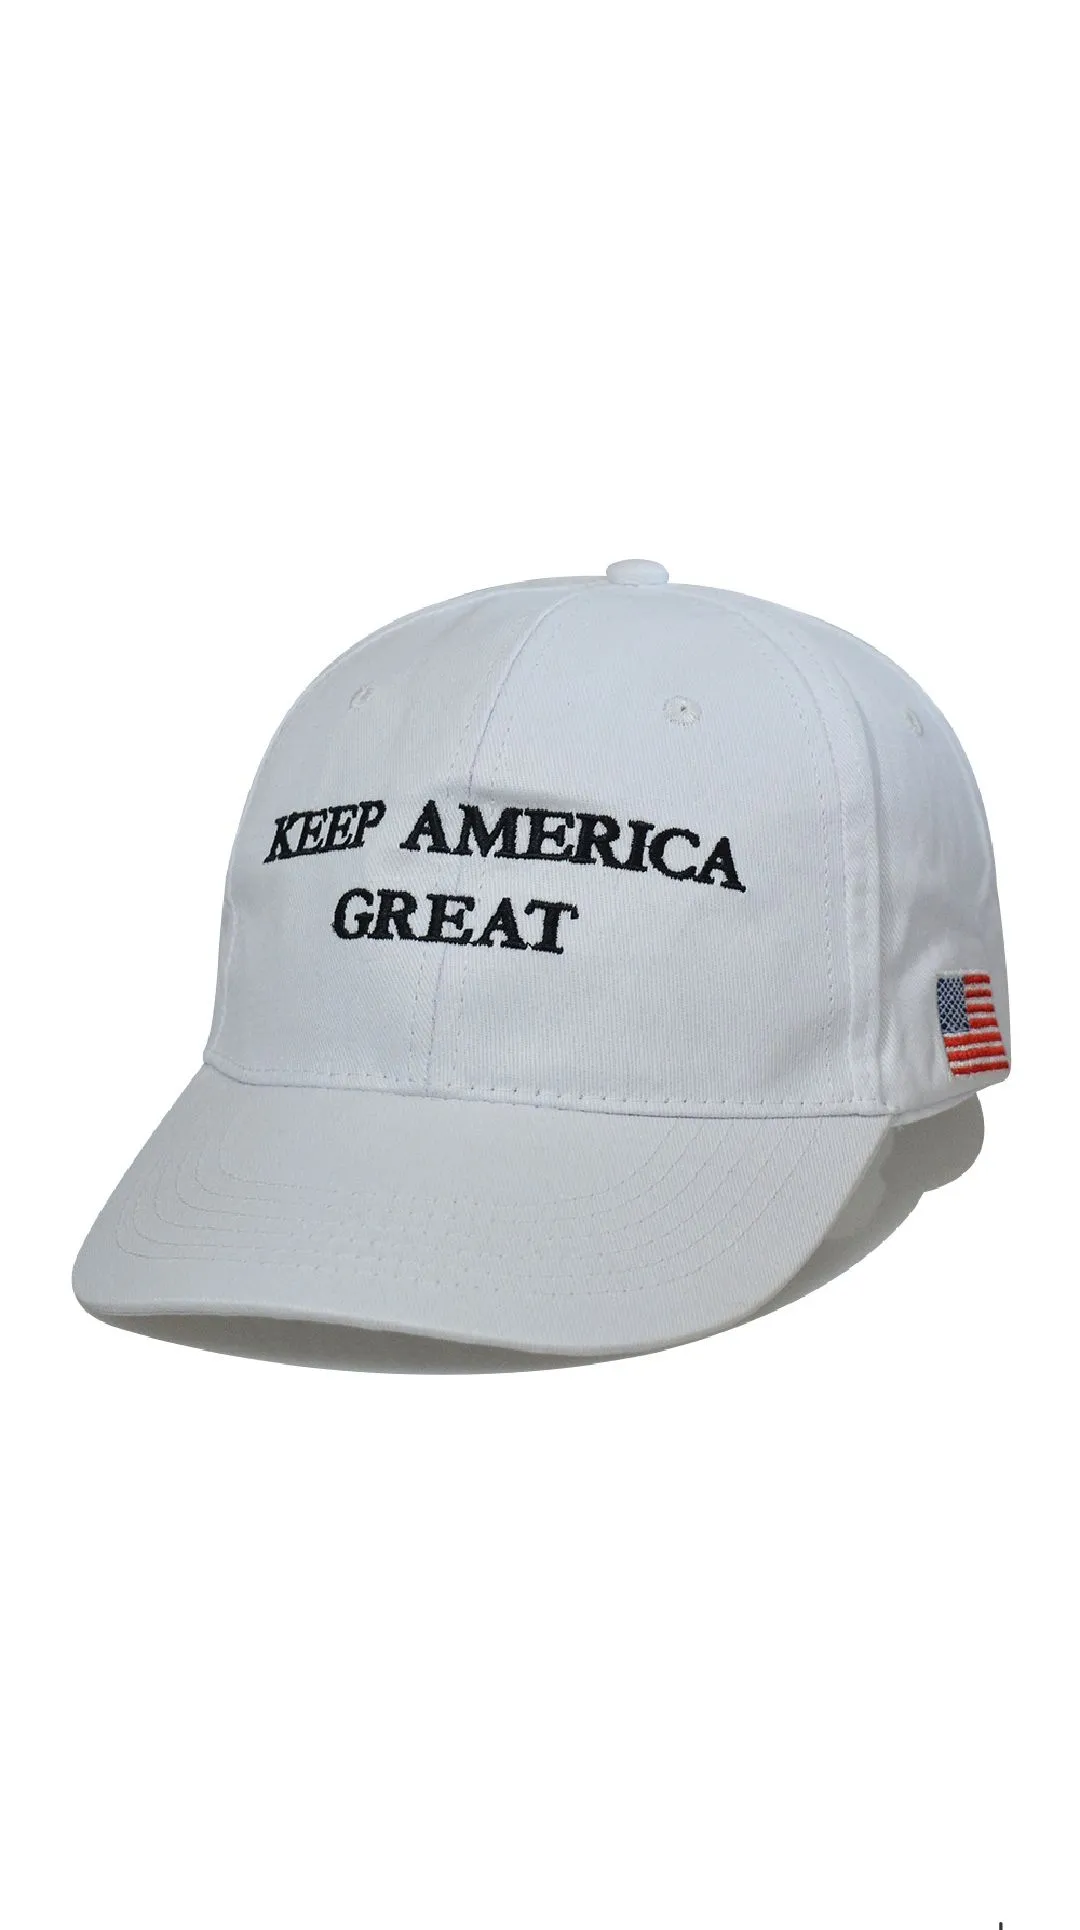 Donald Trump 2024 US Election Baseball Cap Make America Great Great Hat That President Trump Trump Caps with Ameri7147877